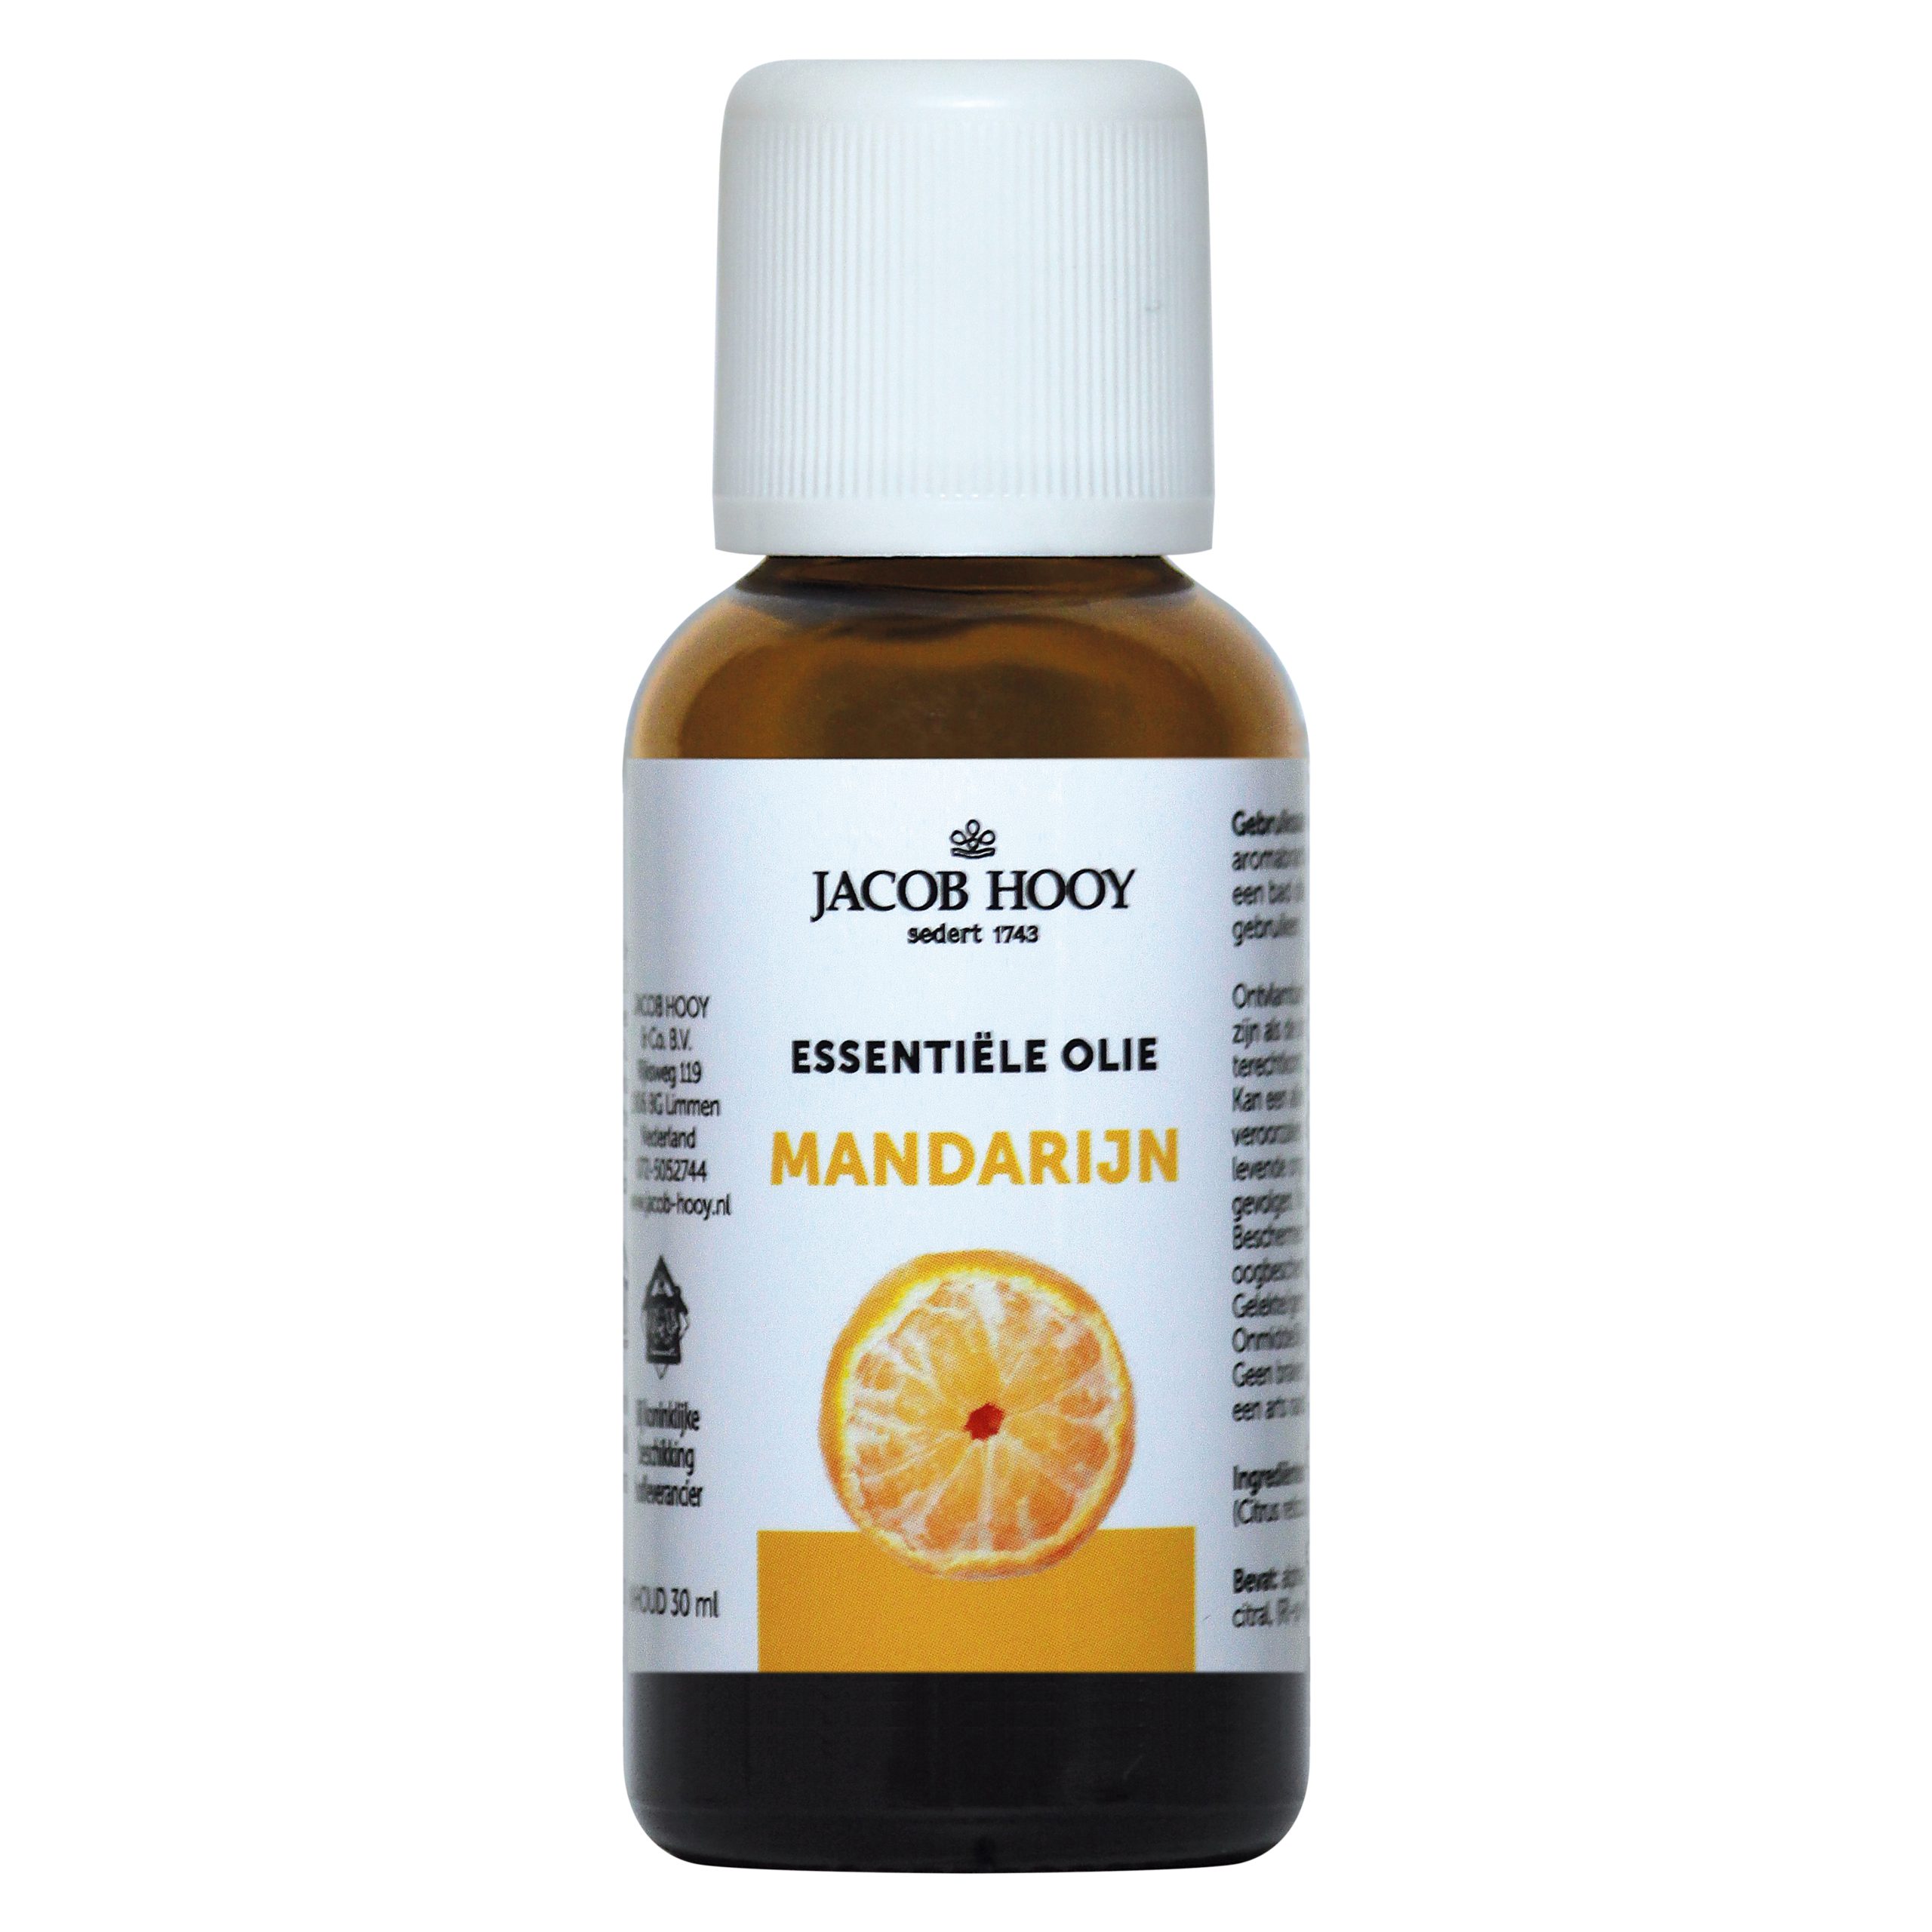 Essentiële olie Mandarijn 30 ml